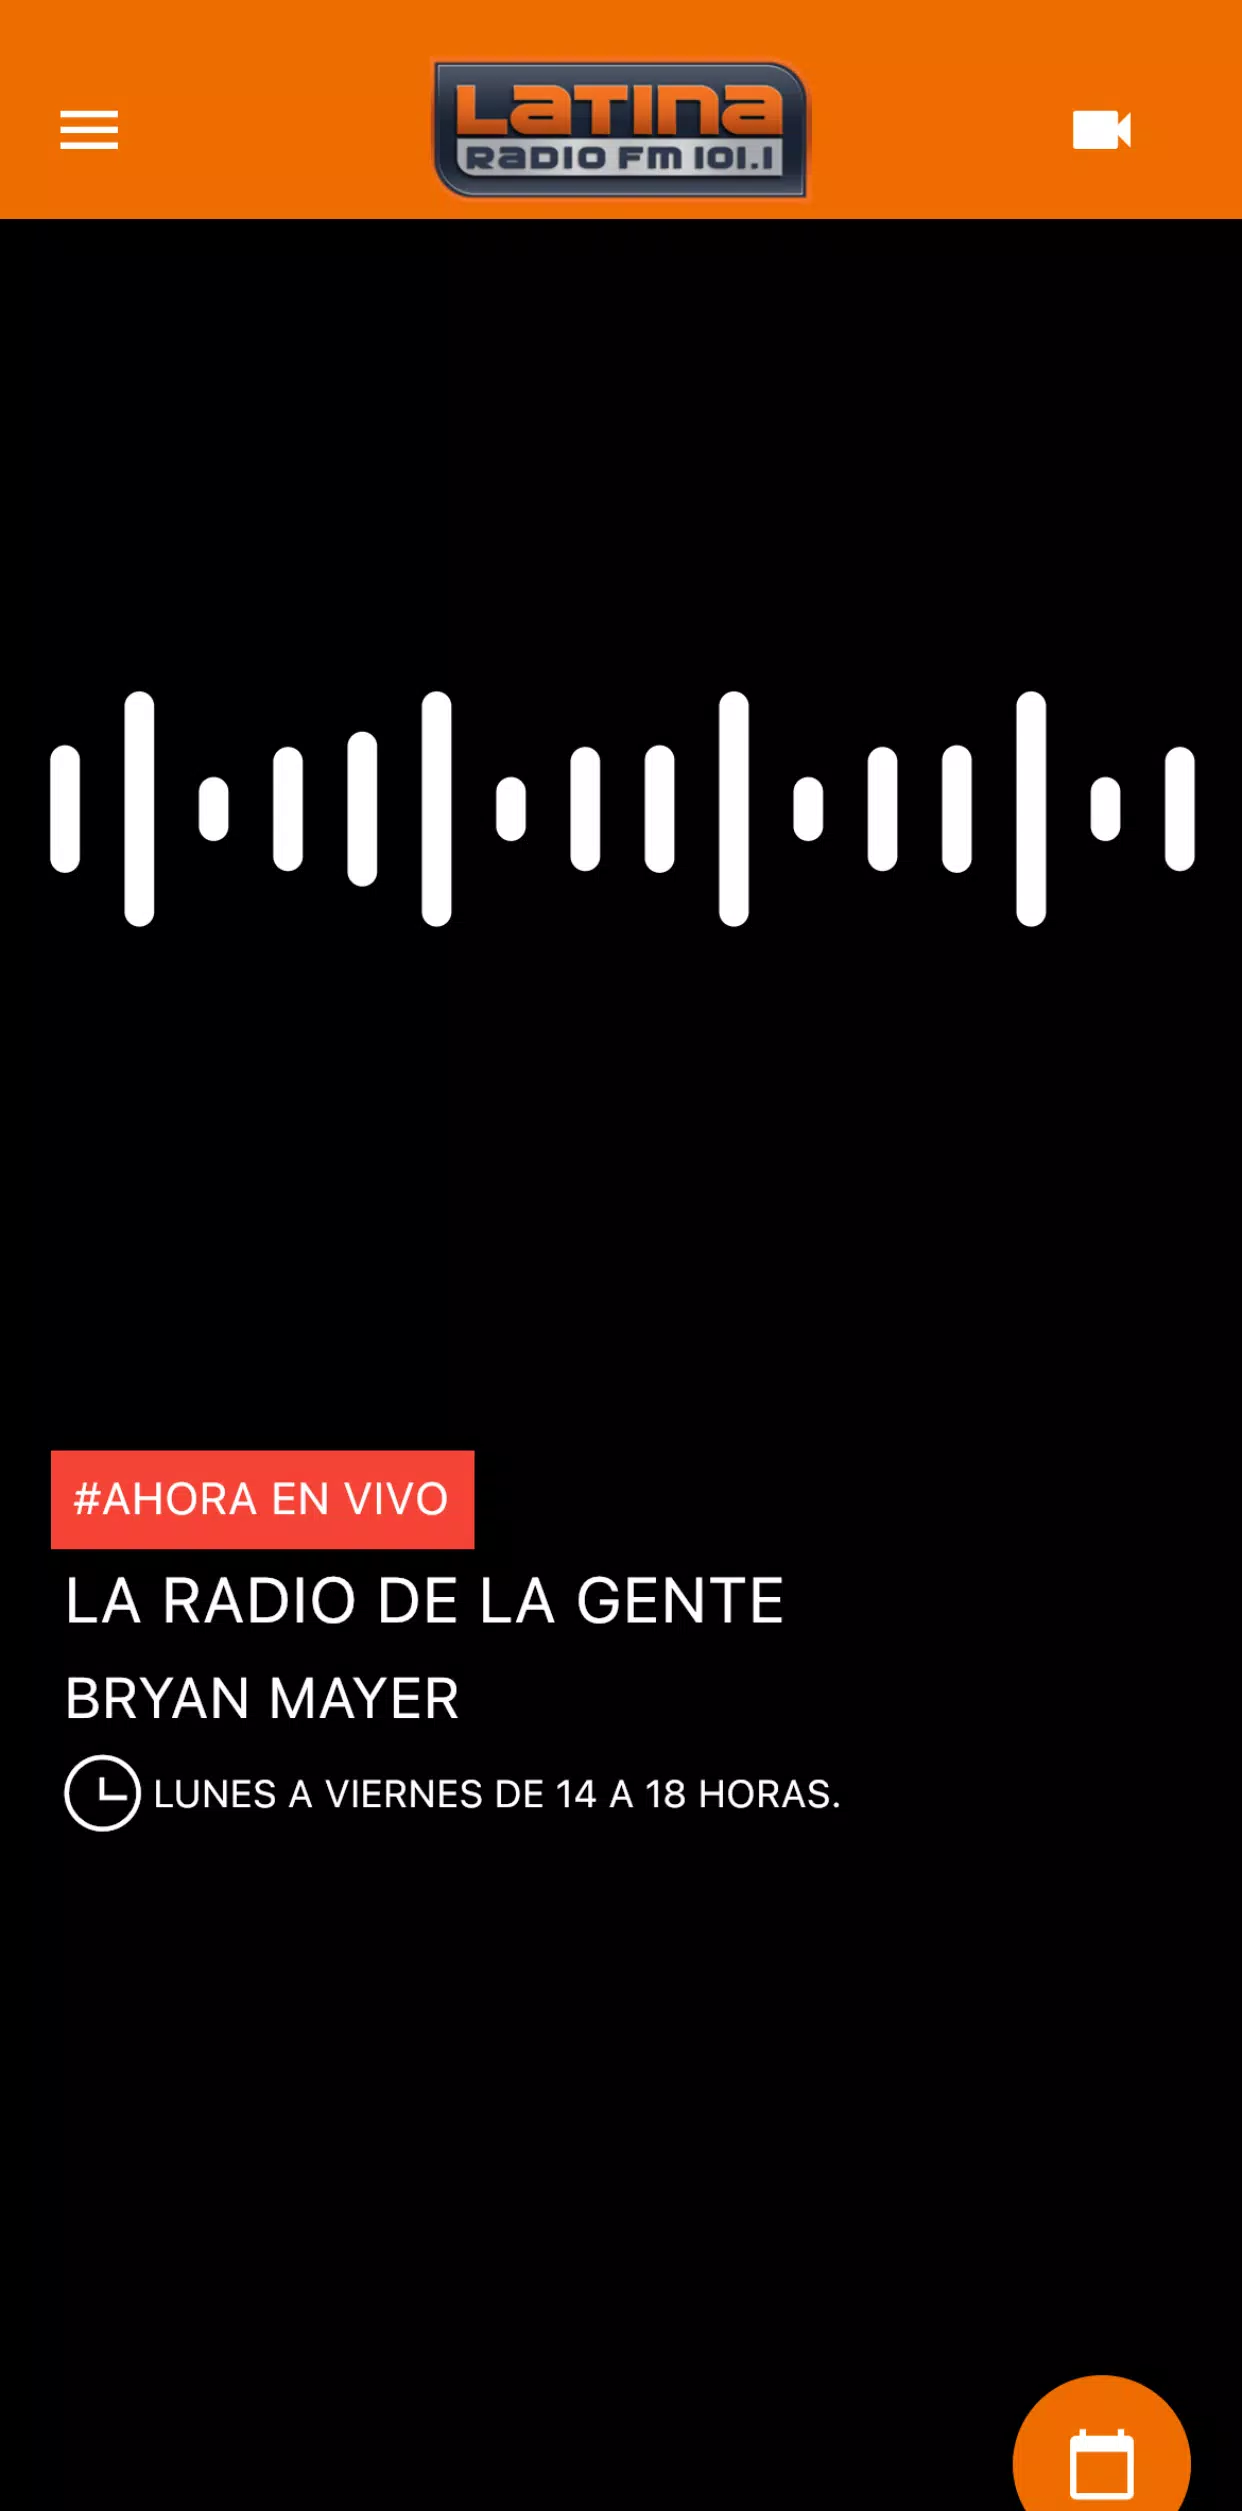 Descarga de APK de Radio Latina para Android